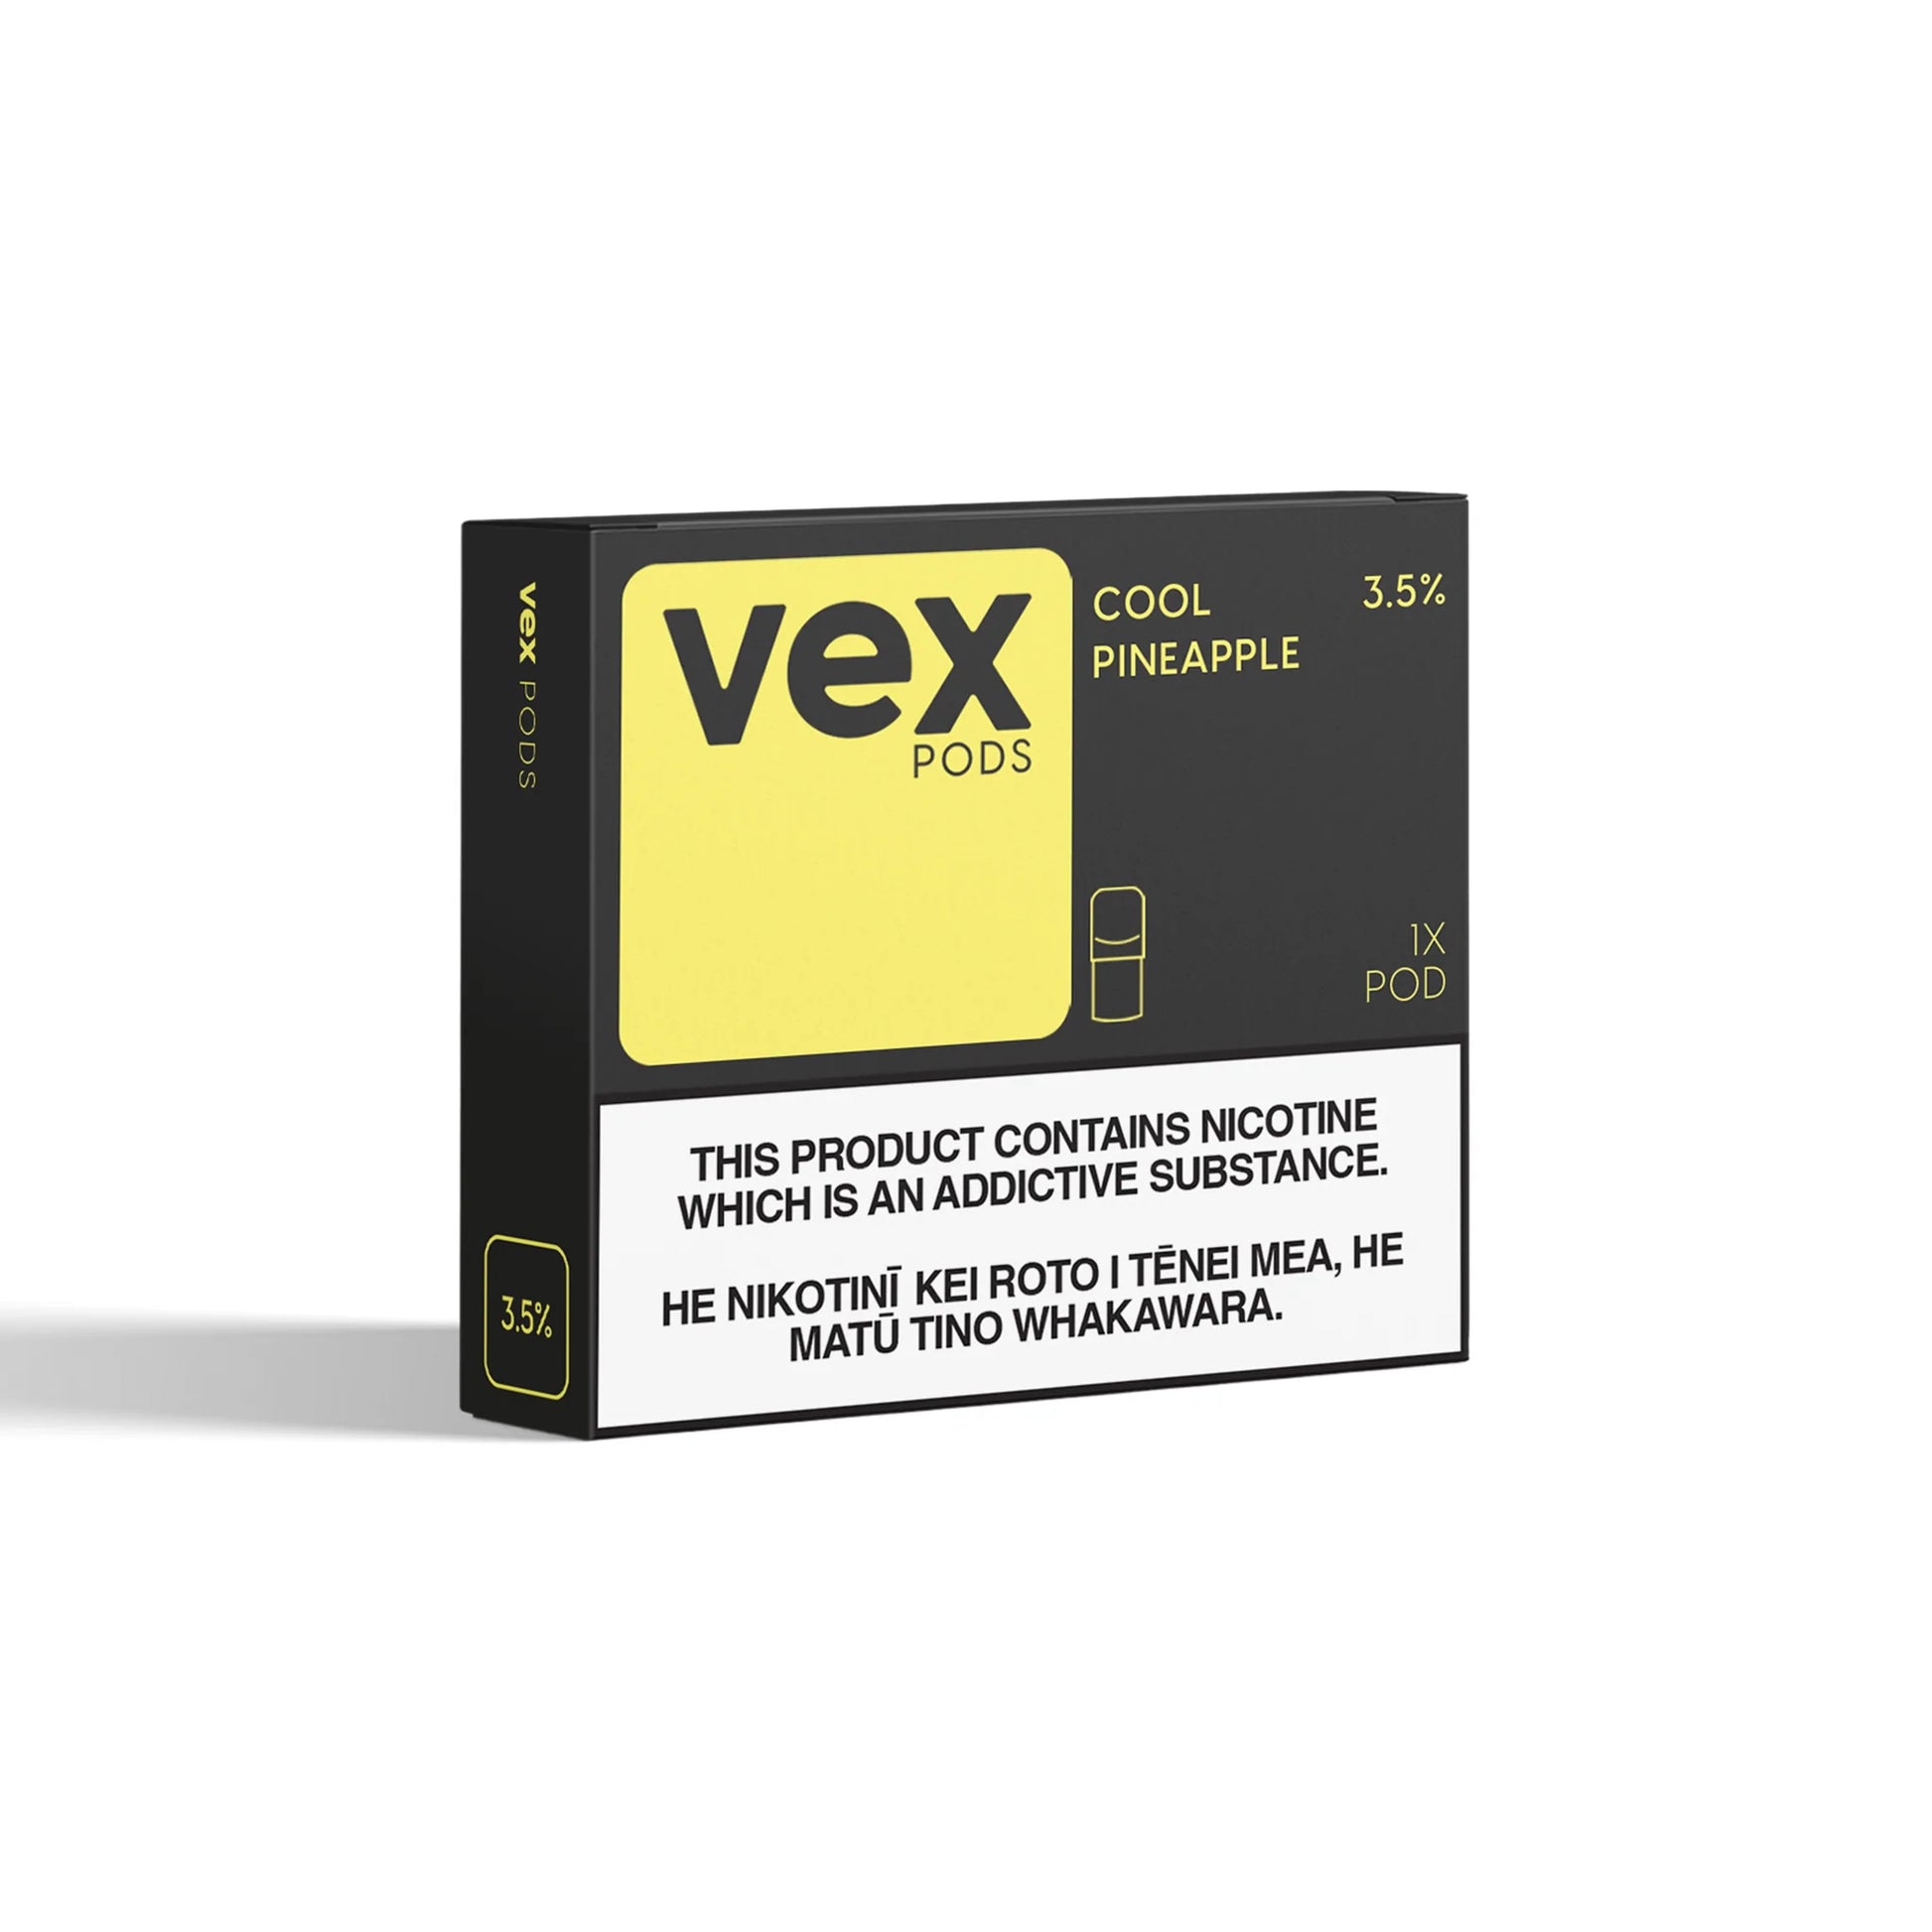 VEX - Cool Pineapple 3.5% - 2020 Vapes